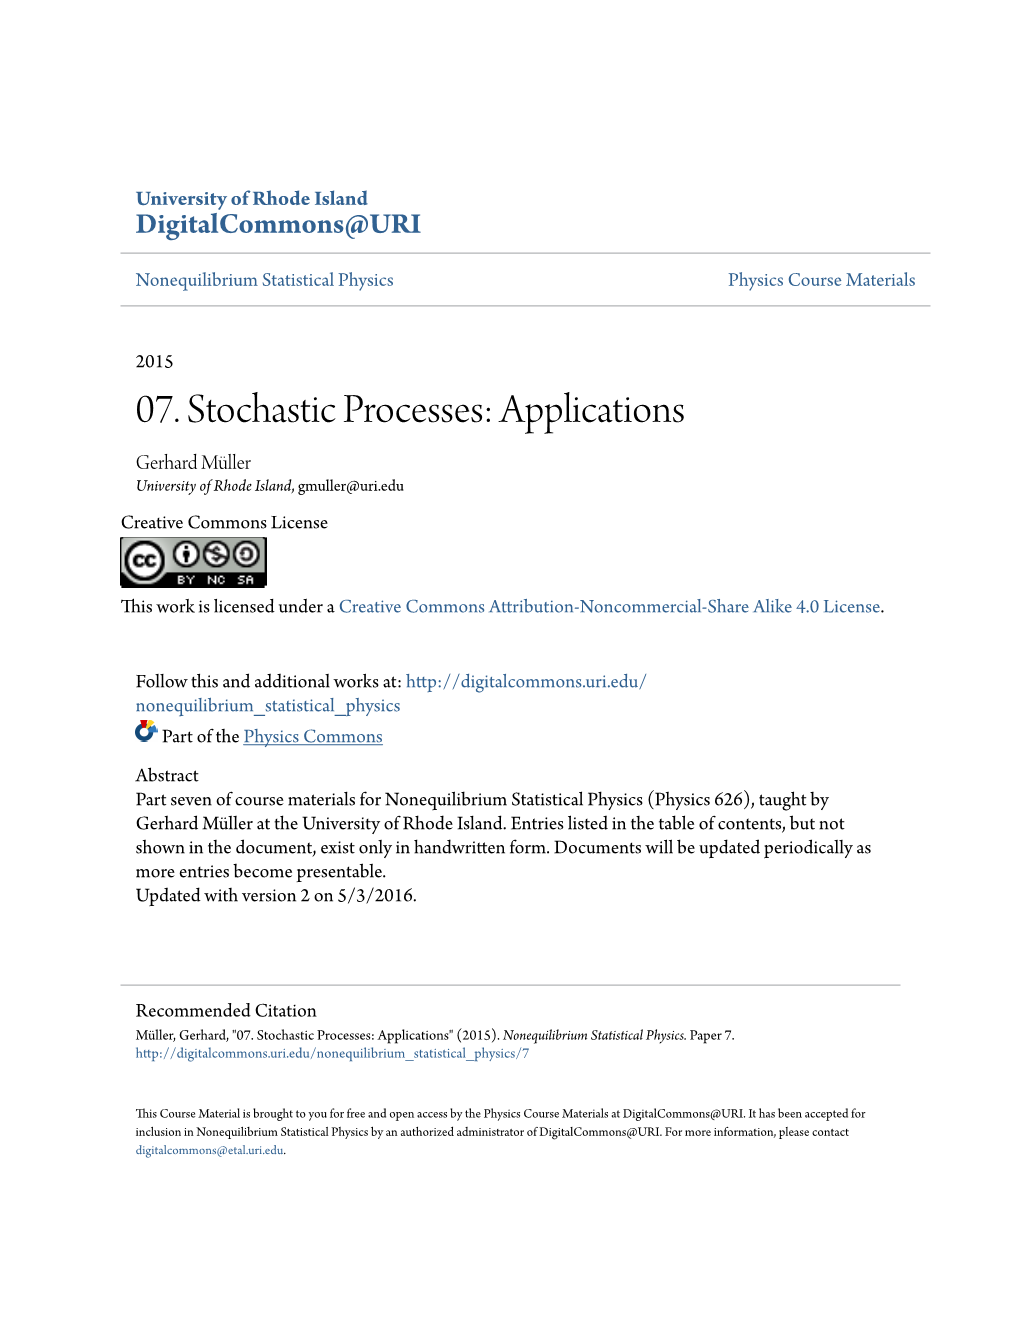 07. Stochastic Processes: Applications Gerhard Müller University of Rhode Island, Gmuller@Uri.Edu Creative Commons License